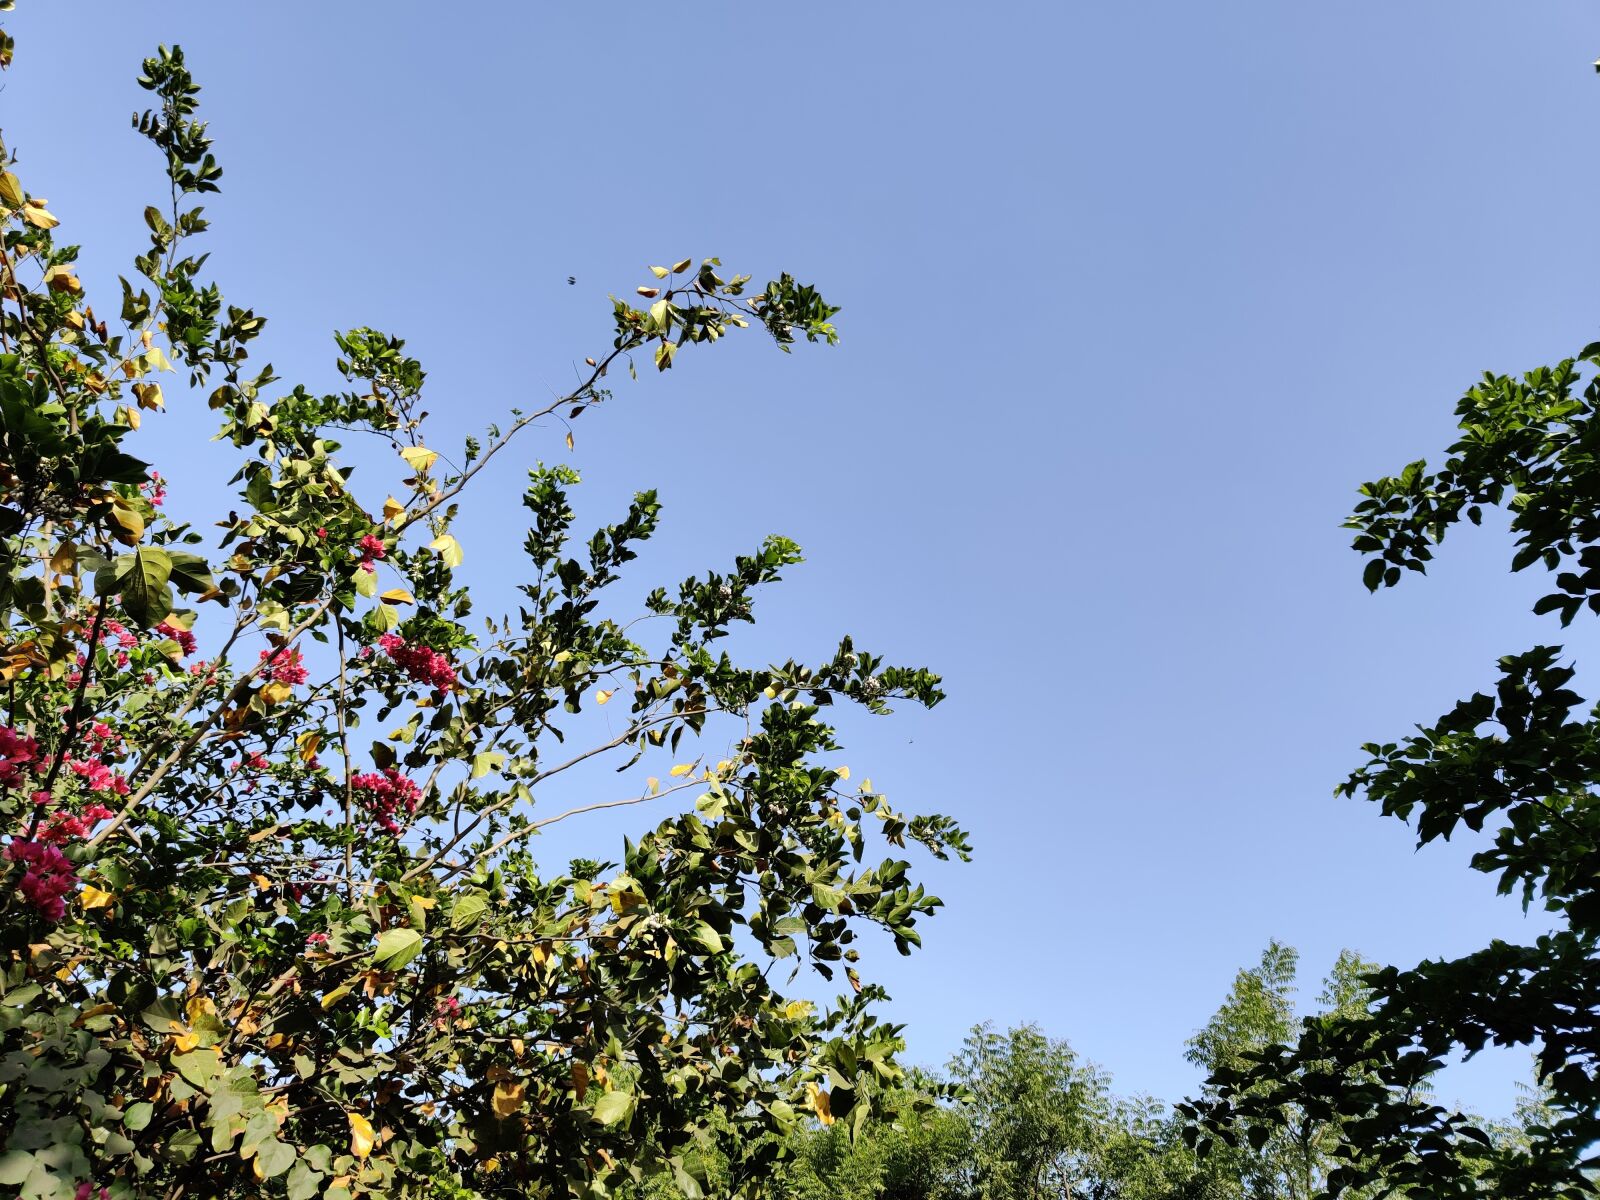 OnePlus HD1901 sample photo. Nature, beautiful image, natural photography